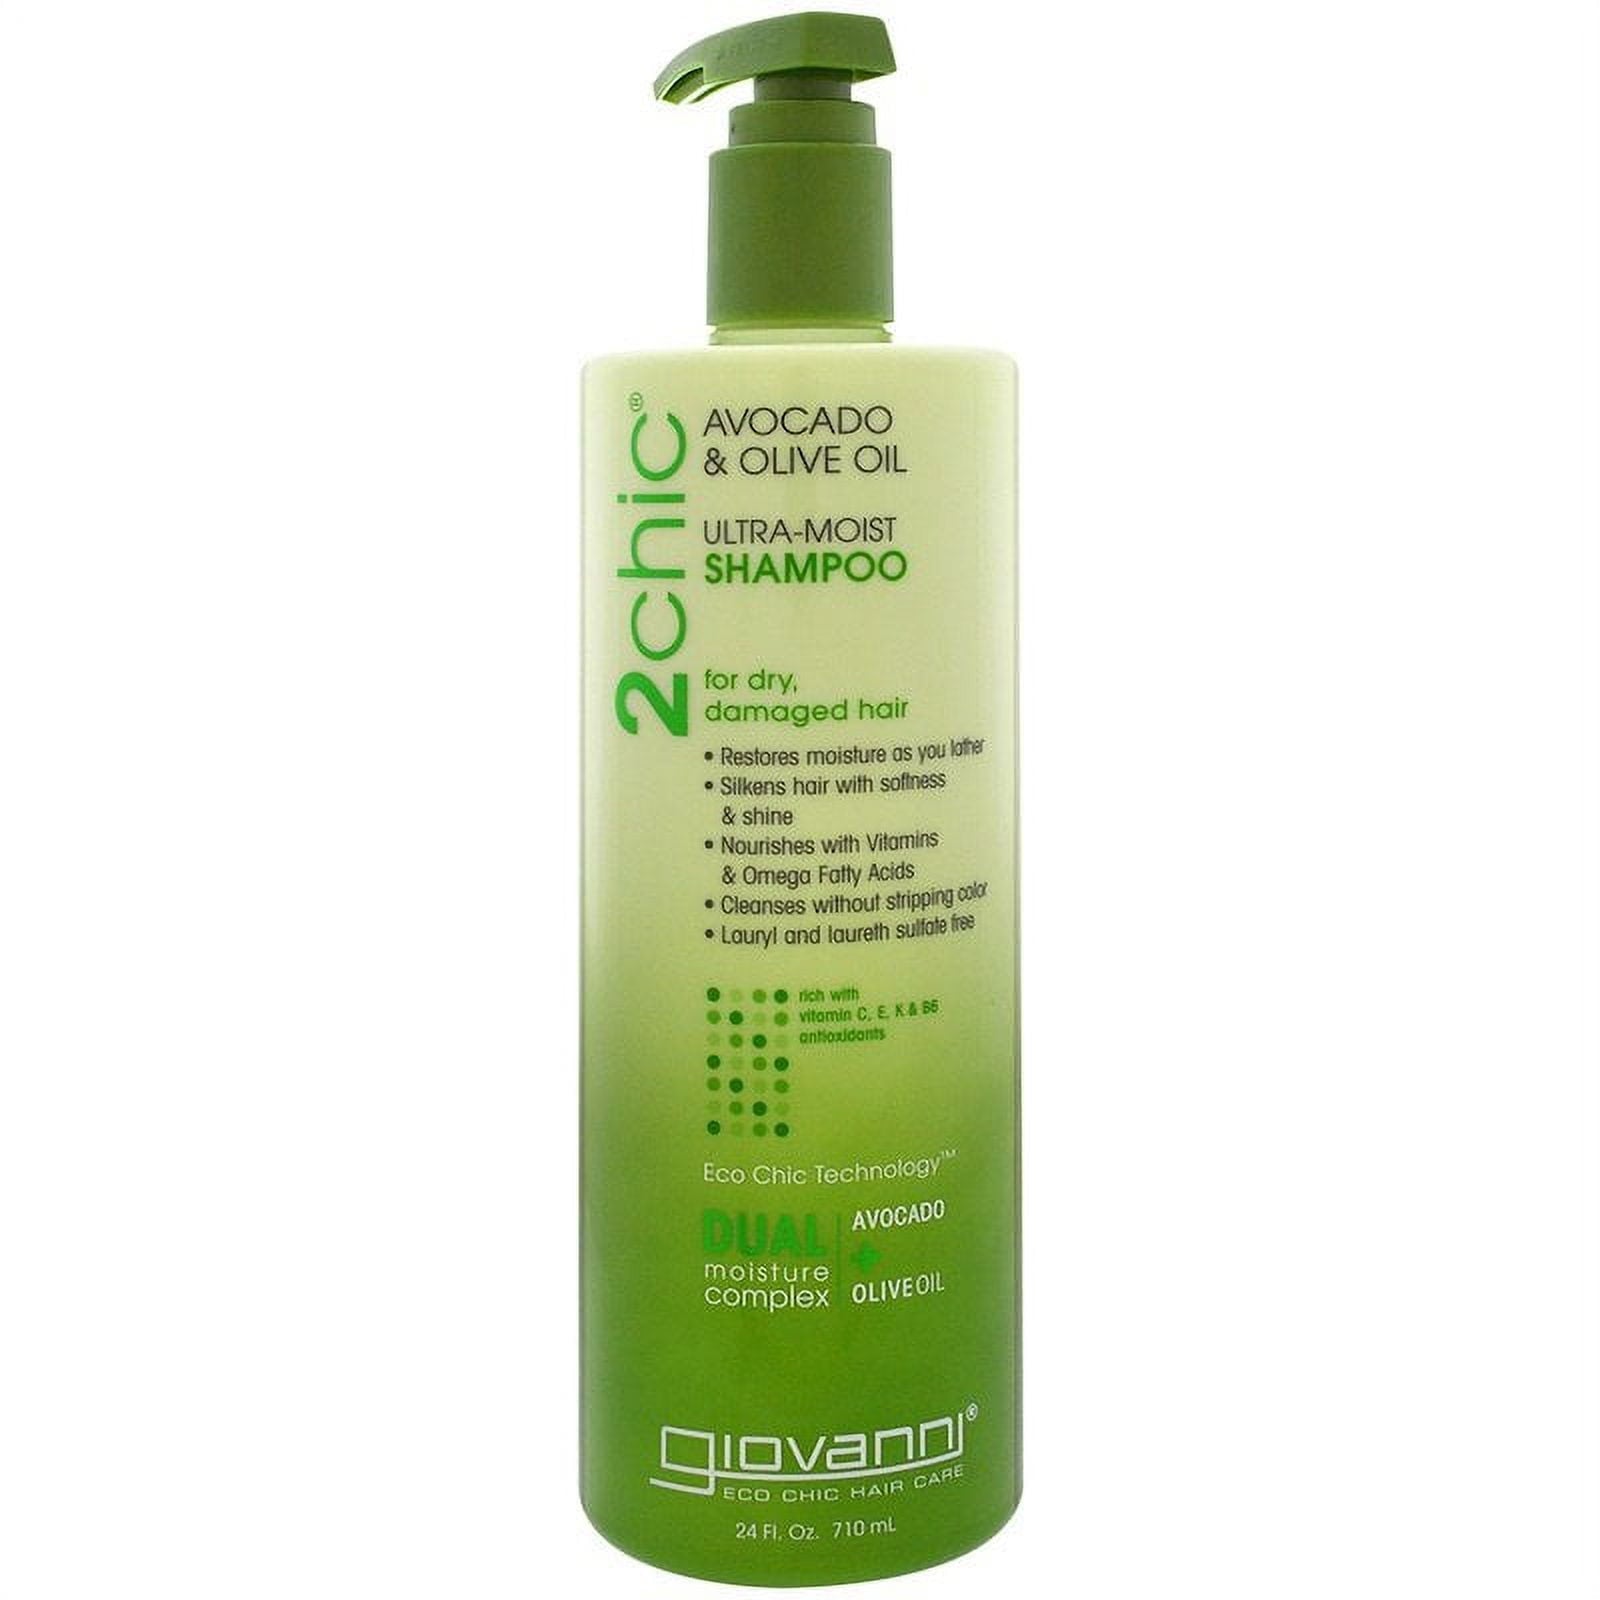 Giovanni 2chic Avocado & Olive Oil Ultra Moist Shampoo 24 oz Bottle